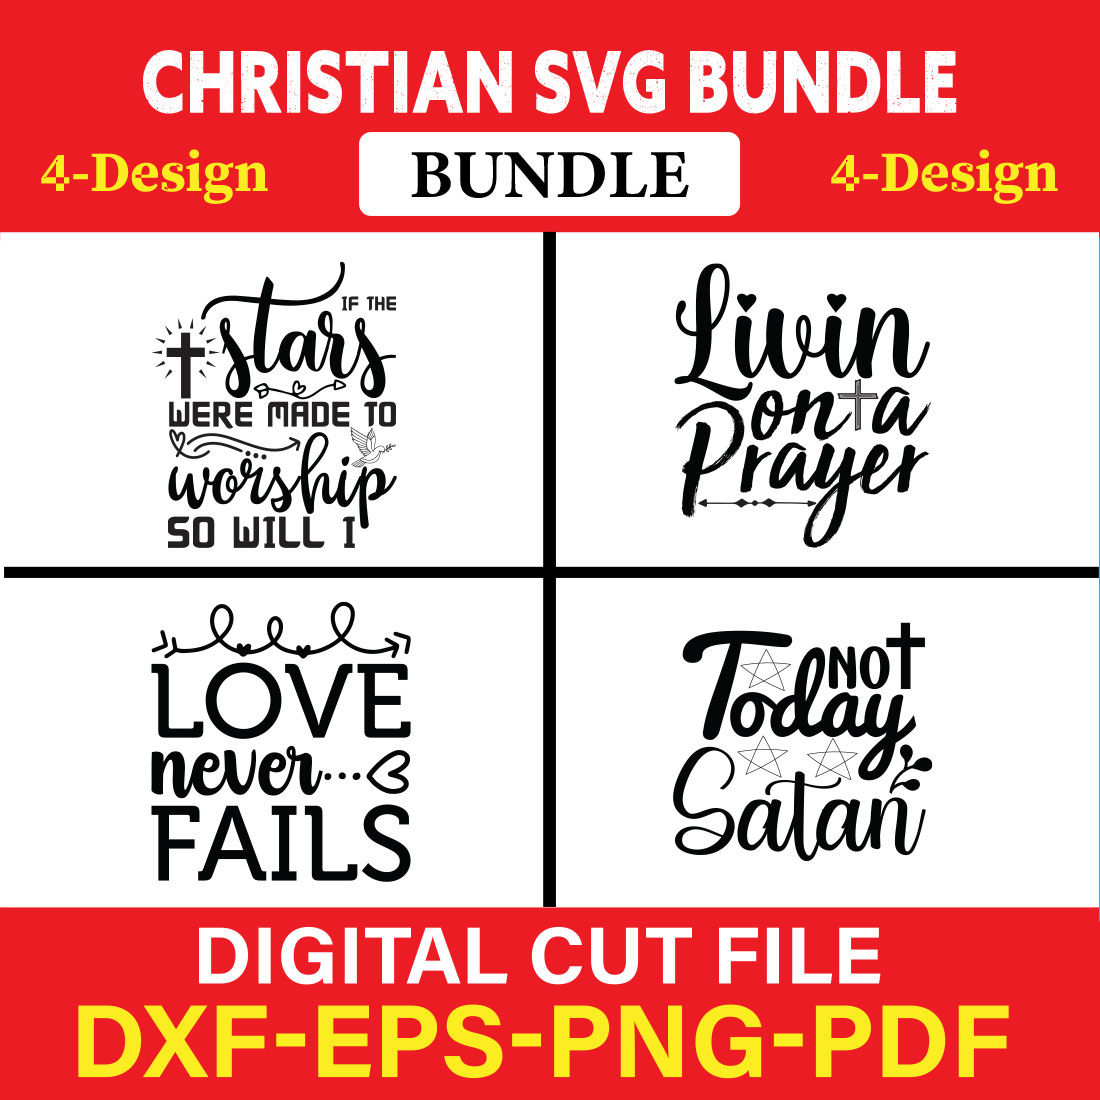 Christian T-shirt Design Bundle Vol-31 cover image.